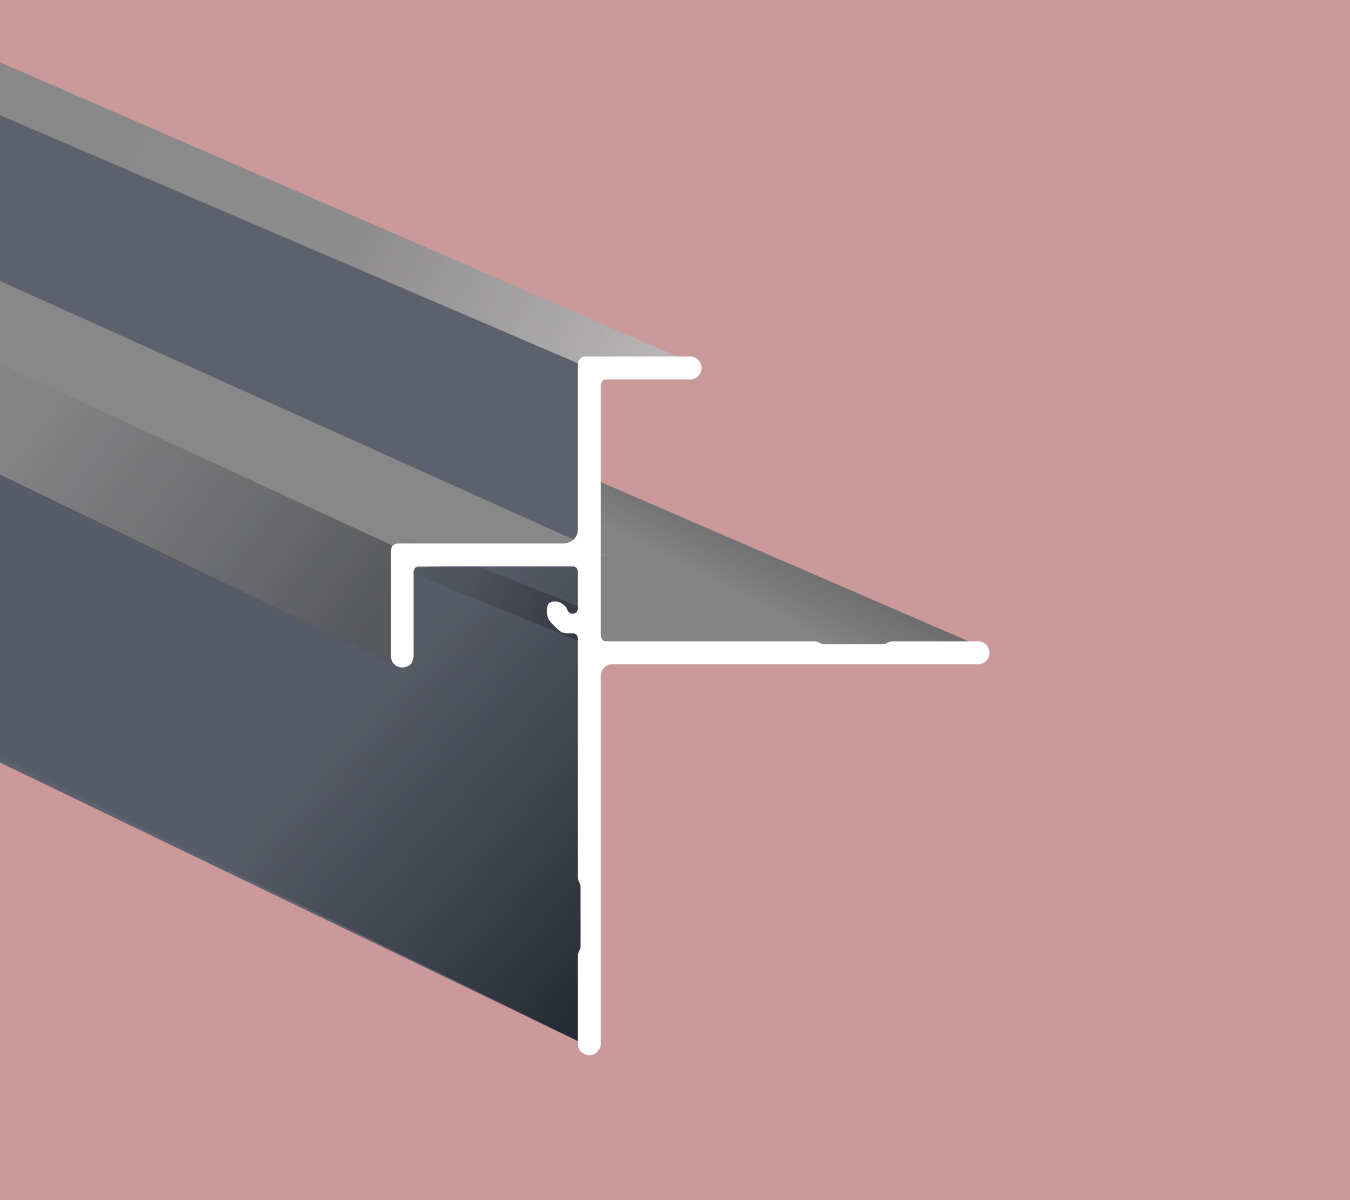 black aluminium corner and transition trim for fiber cement sidings